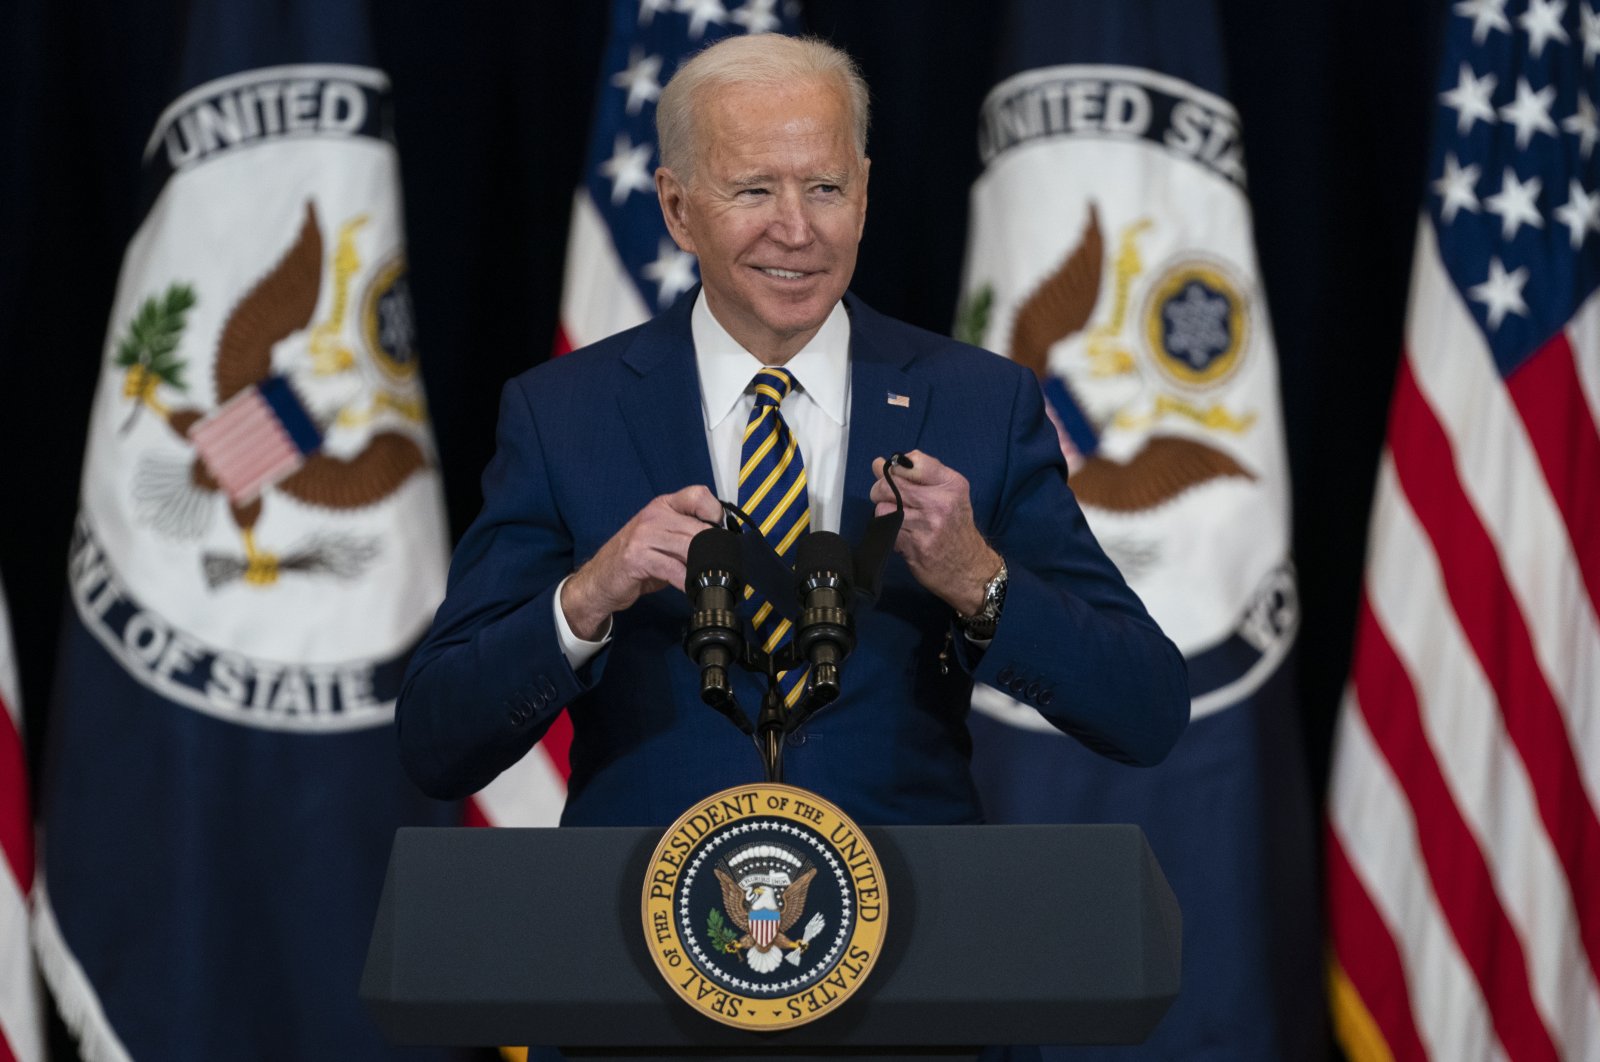 U.S. President Joe Biden smiles as he arrives to deliver remarks to State Department staff, Washington, D.C., U.S., Feb. 4, 2021. (AP Photo)